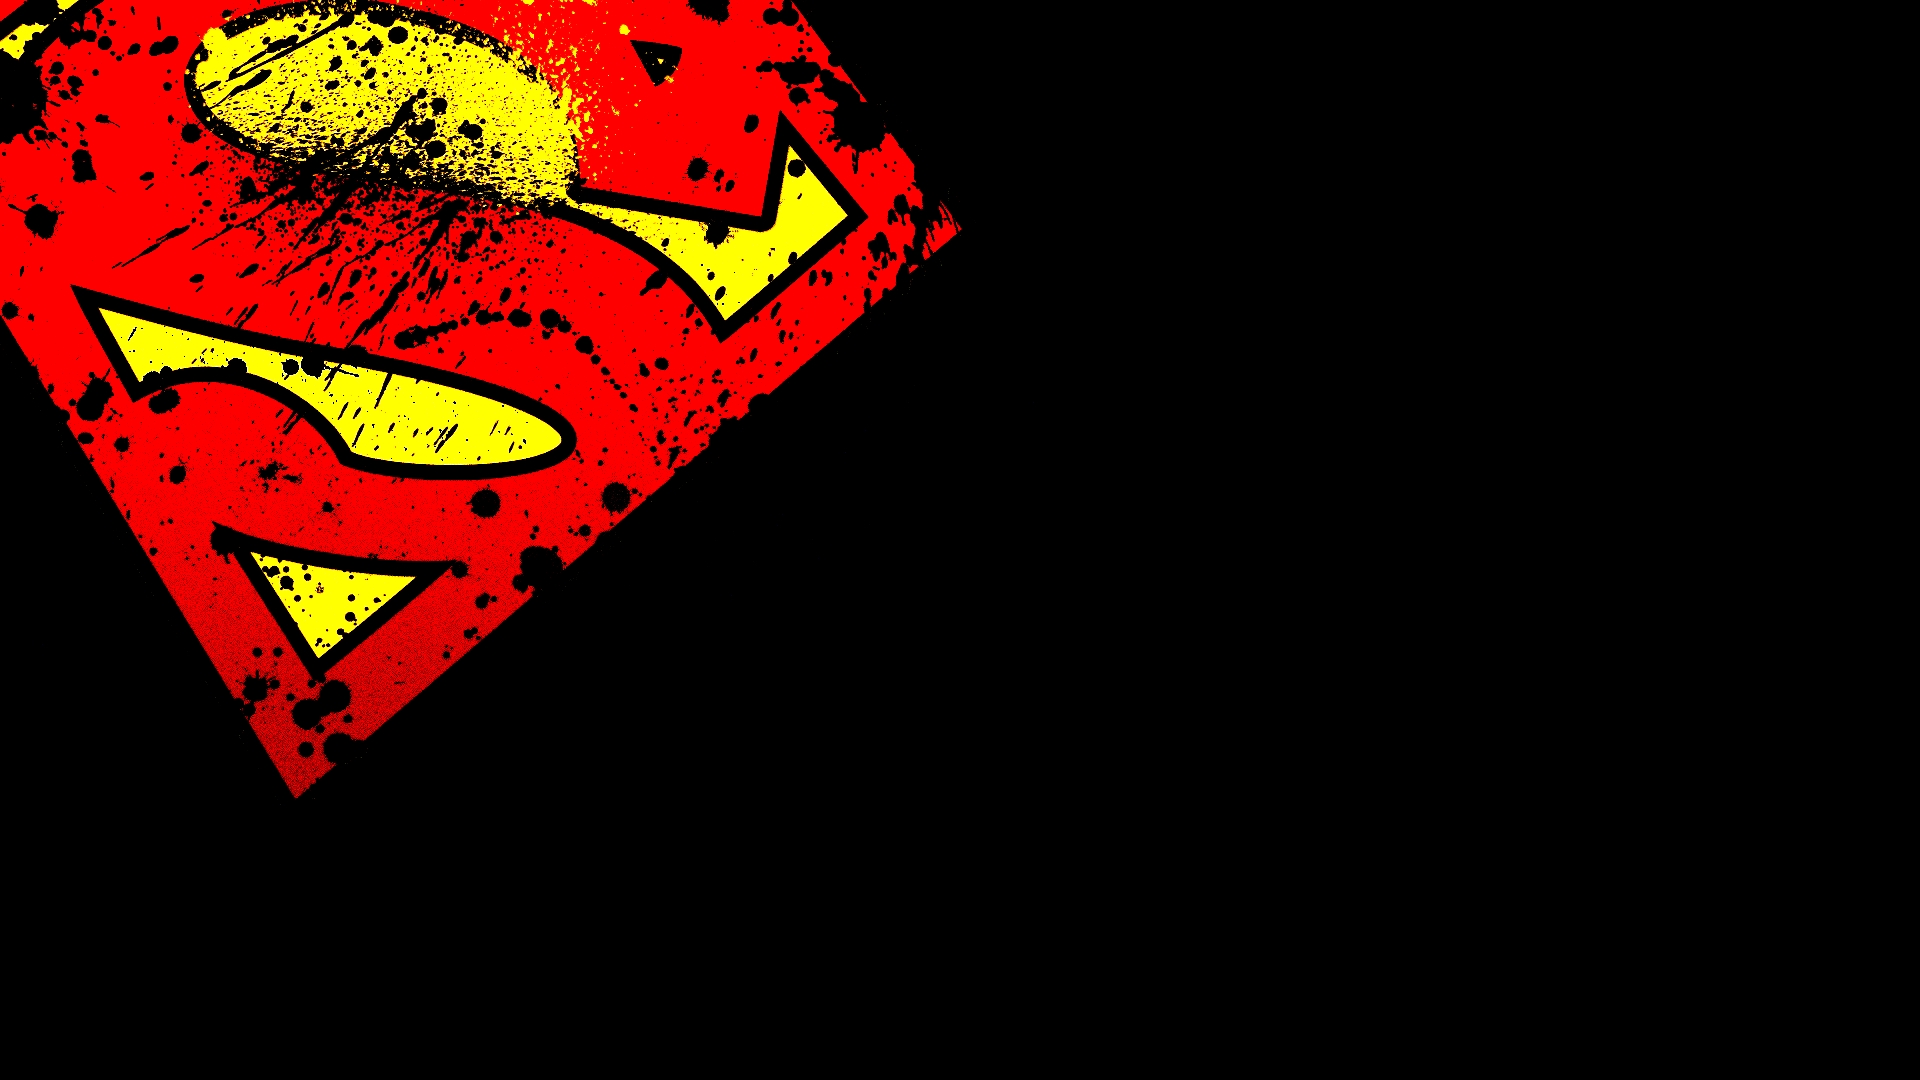 Скачать обои бесплатно Супермен, Логотип Супермена, Комиксы картинка на рабочий стол ПК